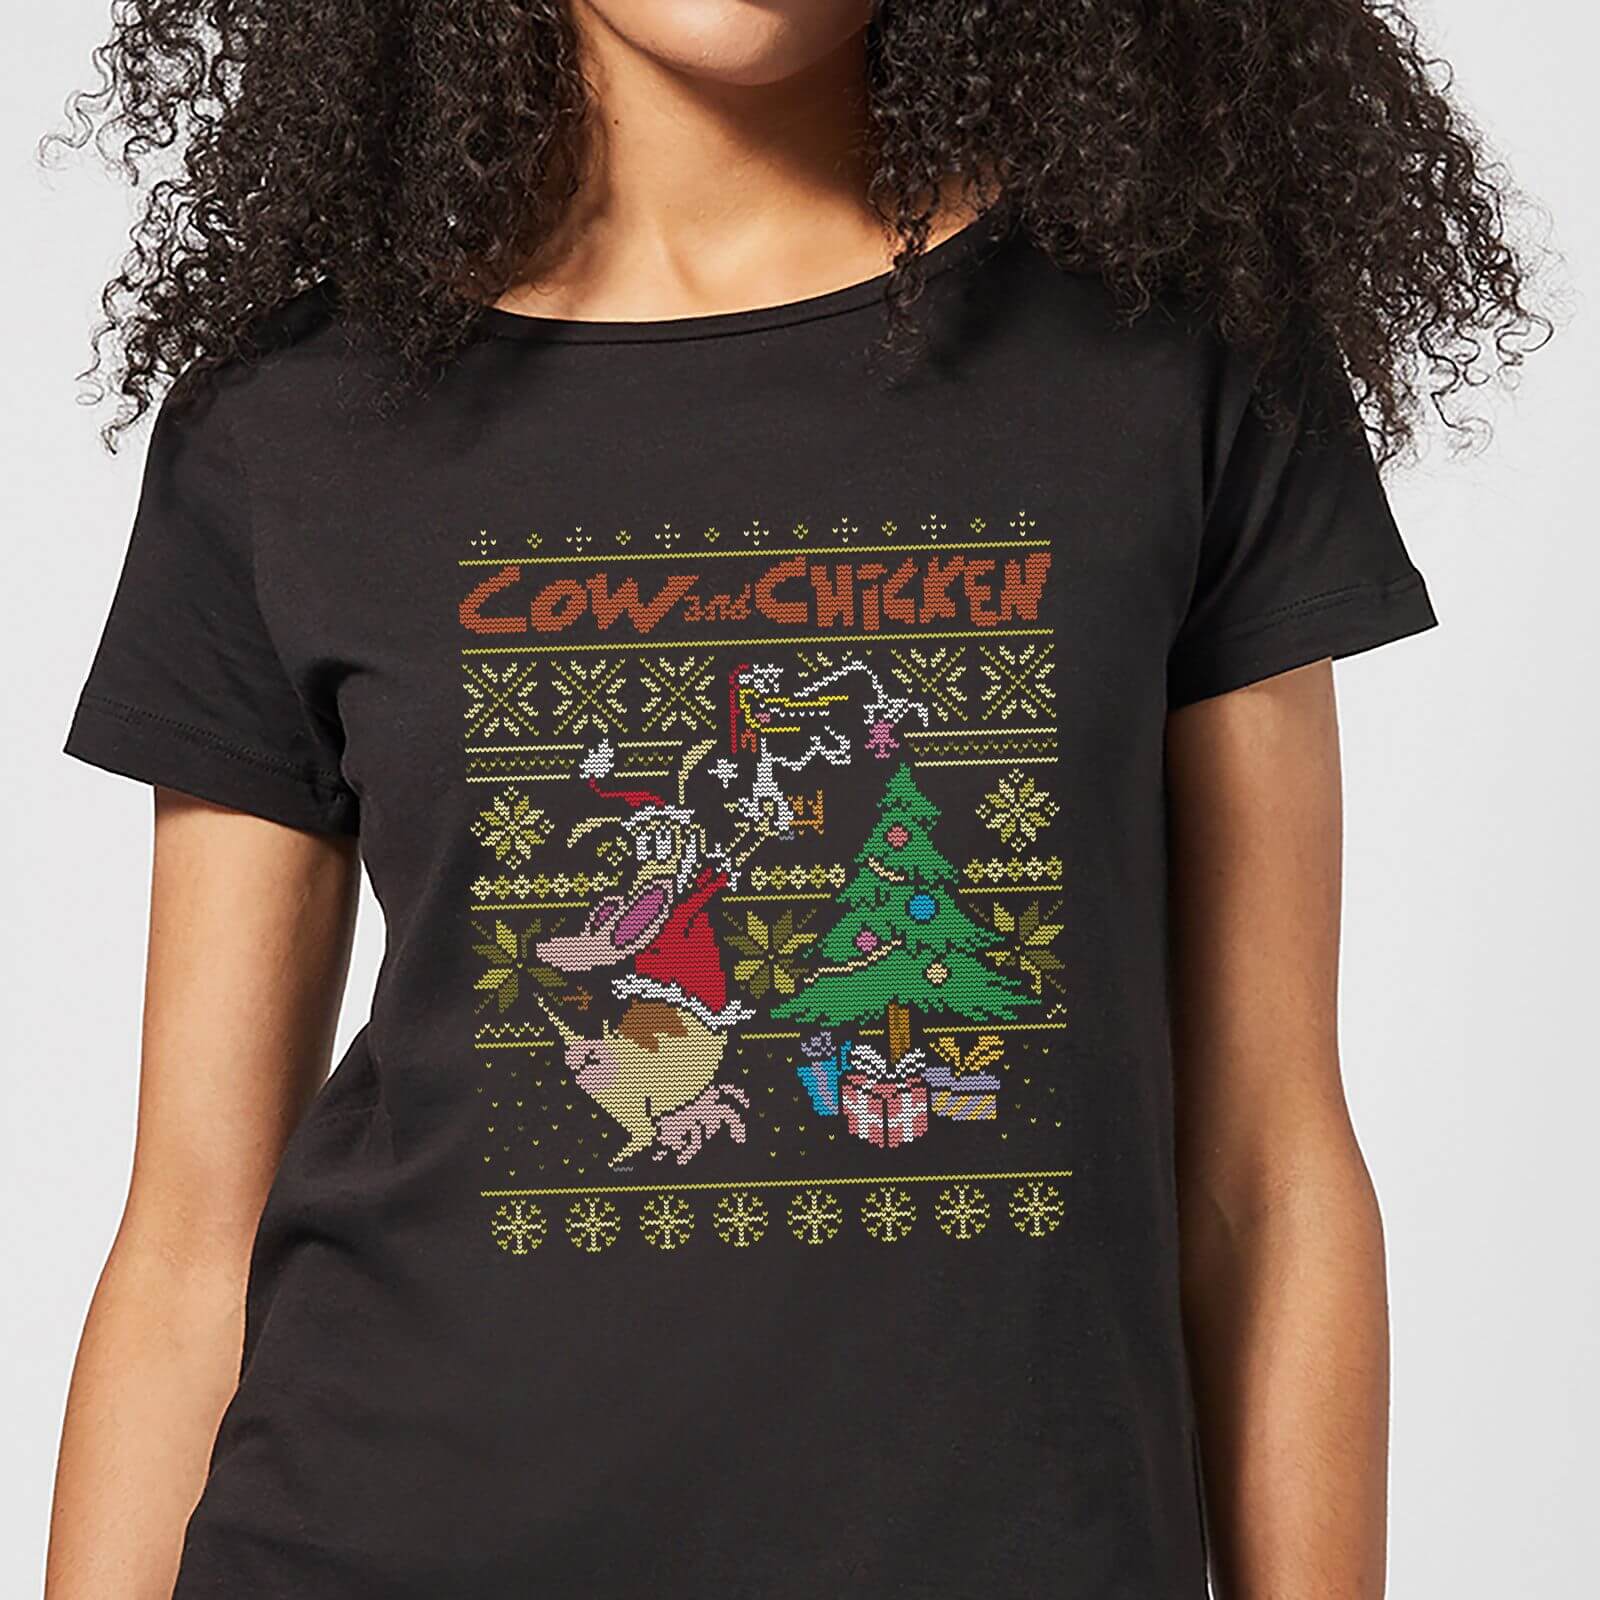 cartoon network cow and chicken cow and chicken pattern womens christmas t-shirt - black - xl schwarz